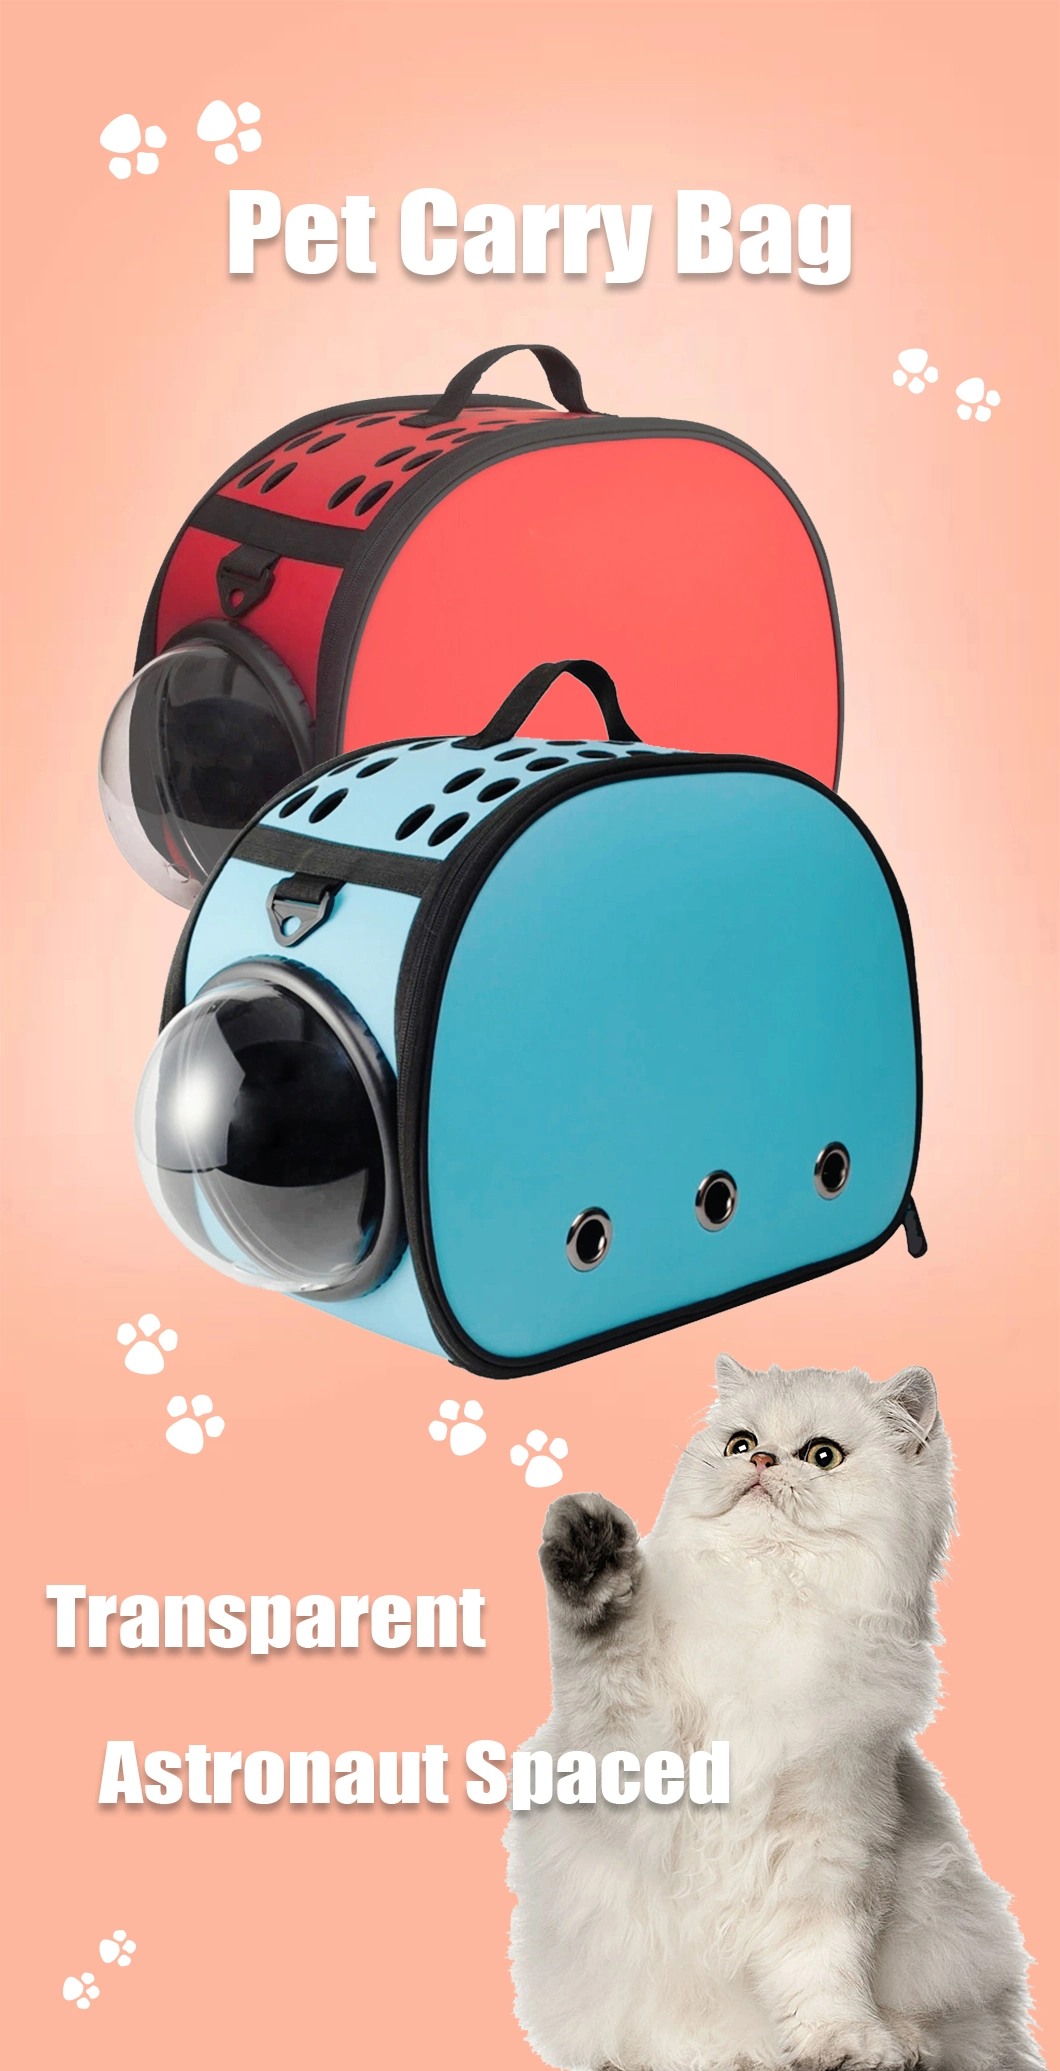 Transparent Astronaut Spaced Capsule Shaped Pet Cat Dog Bag Travel Crate Carrier Bag